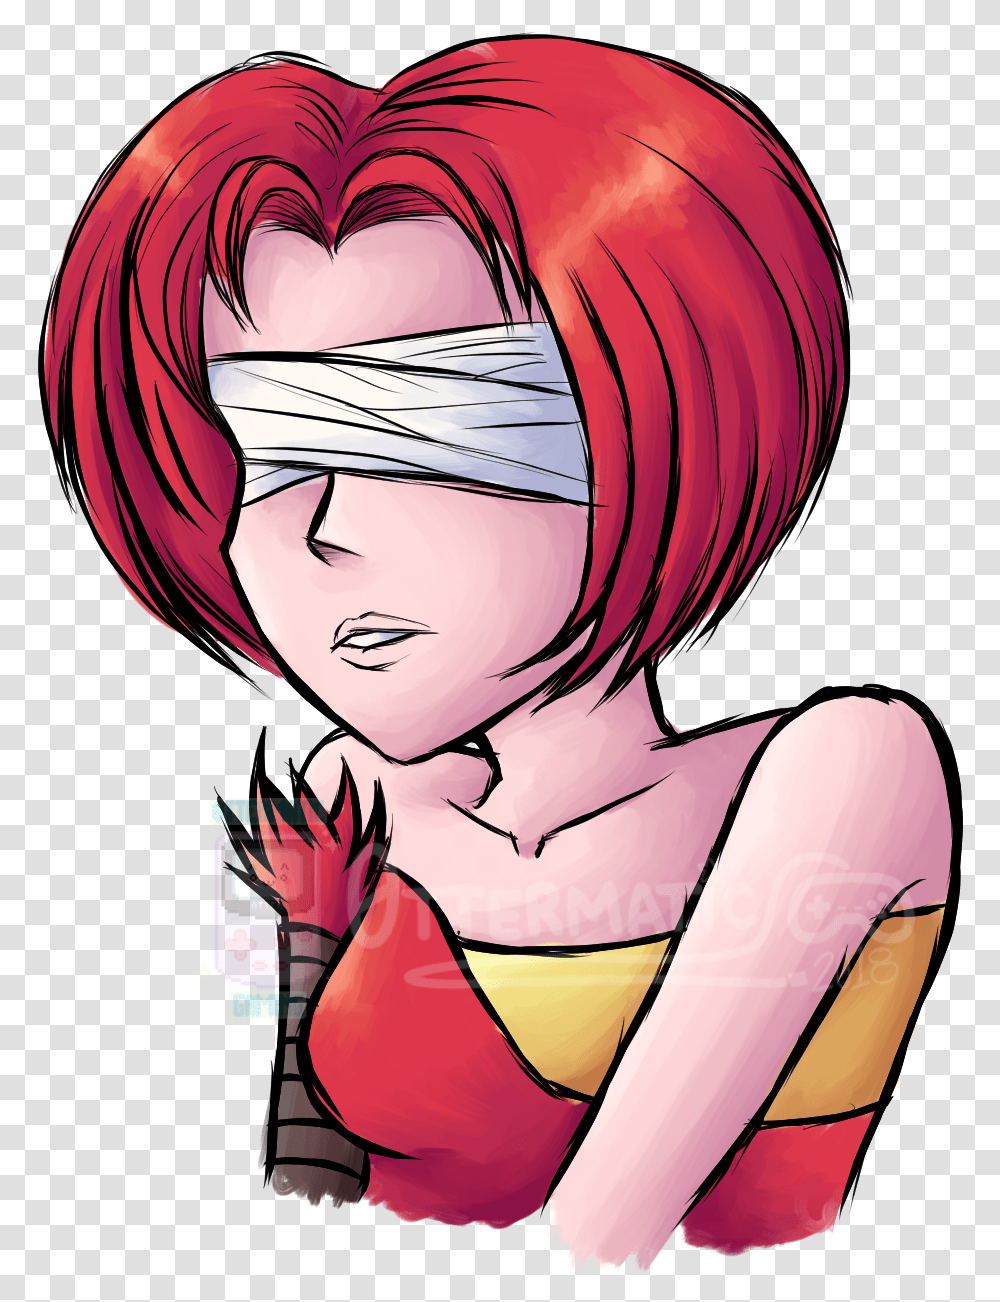 Idiot Is Wearing The Blindfold Wrong Fr Cartoon, Comics, Book, Person, Manga Transparent Png